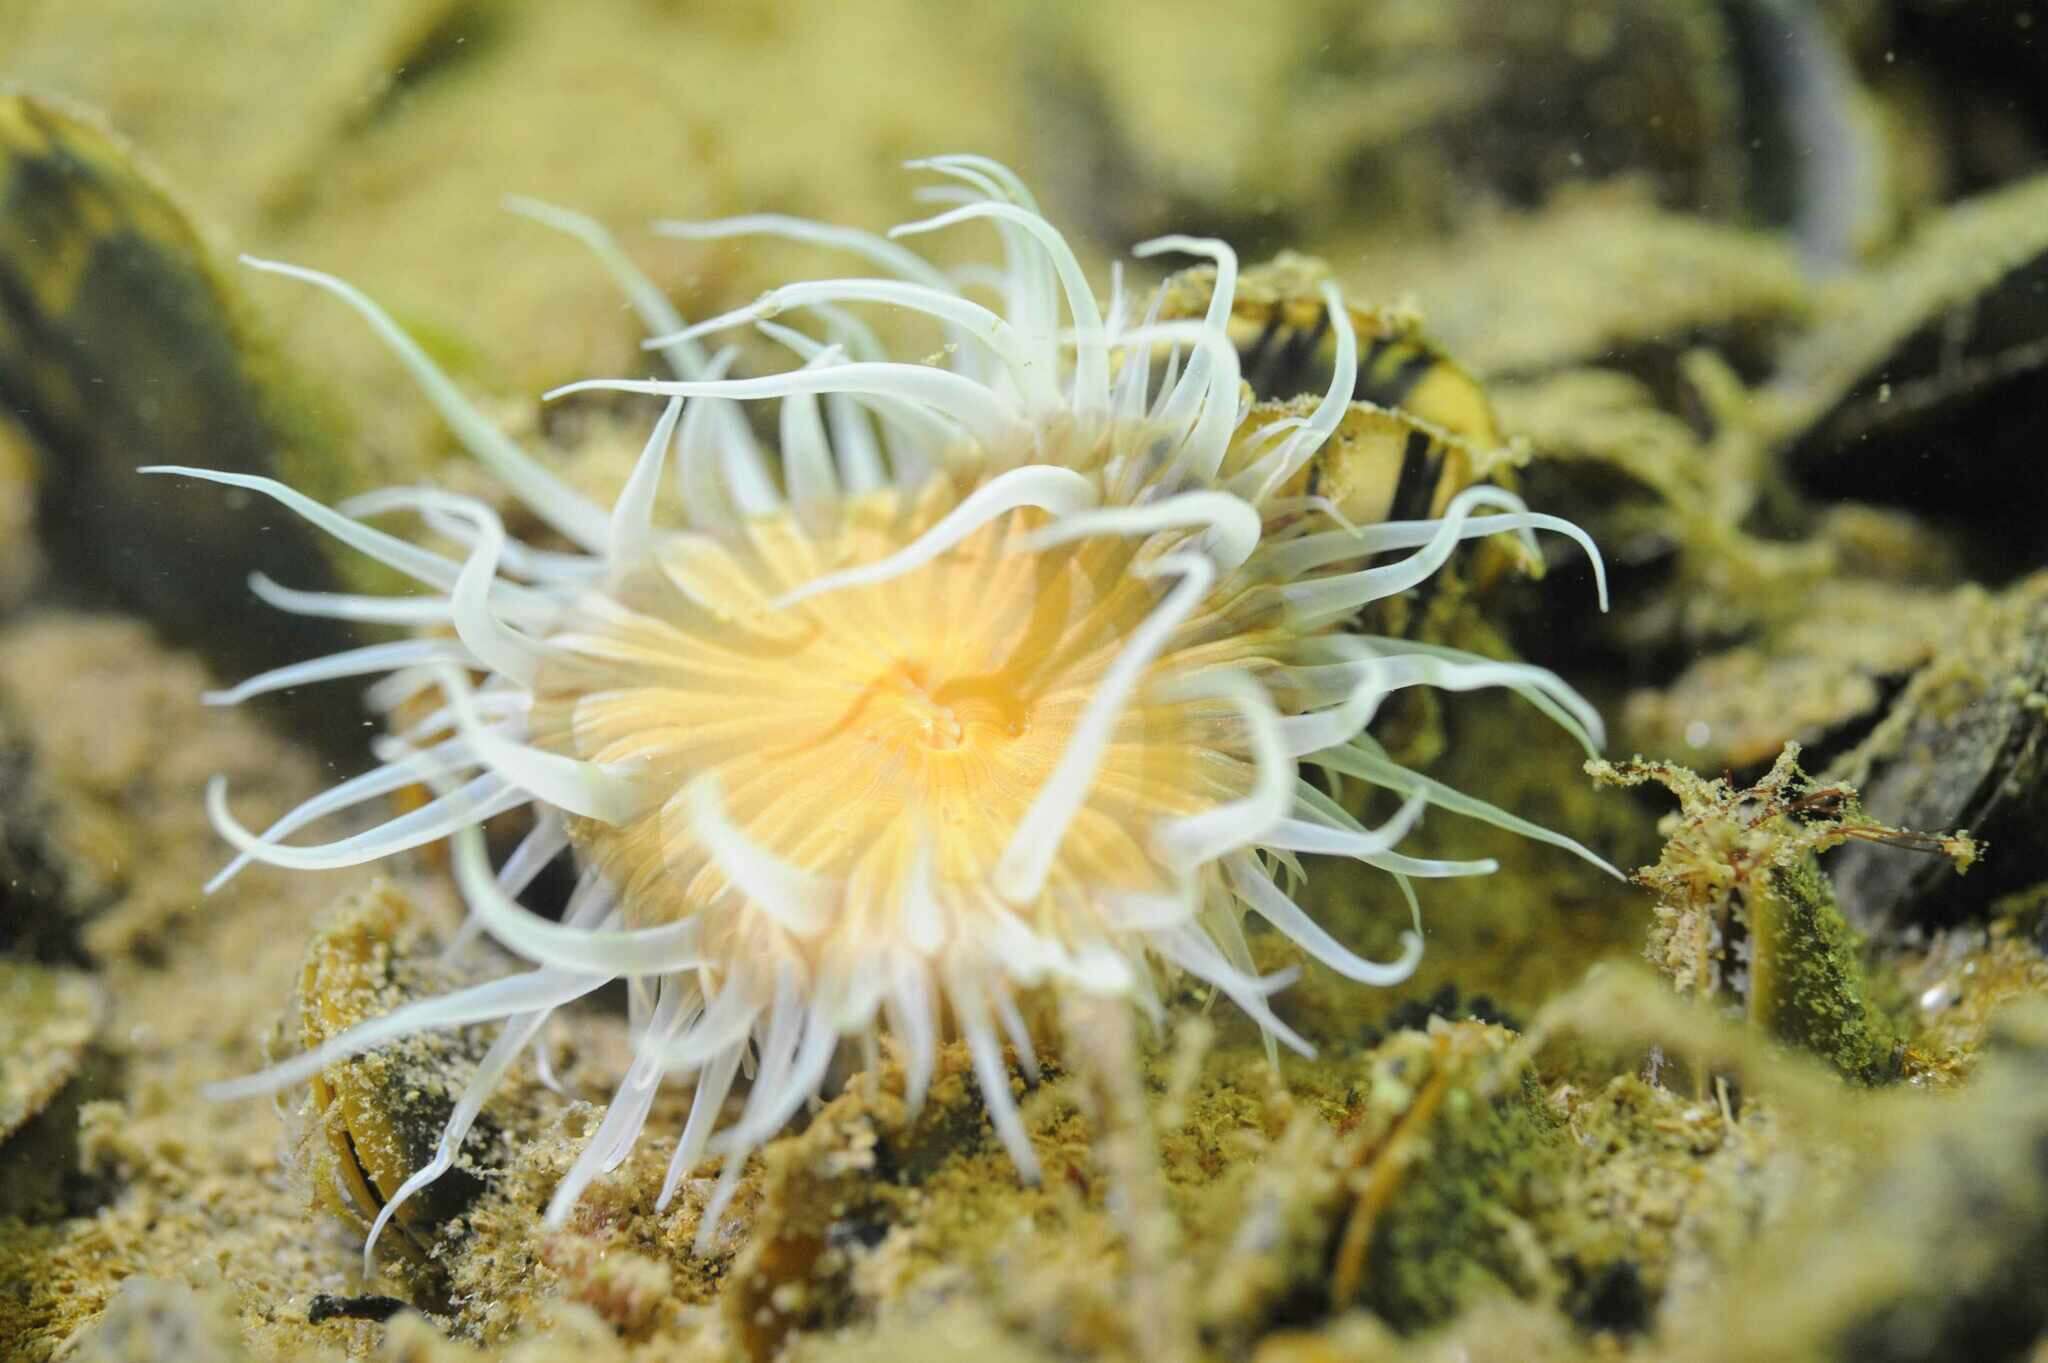 Image of thenarian burrowing anemones